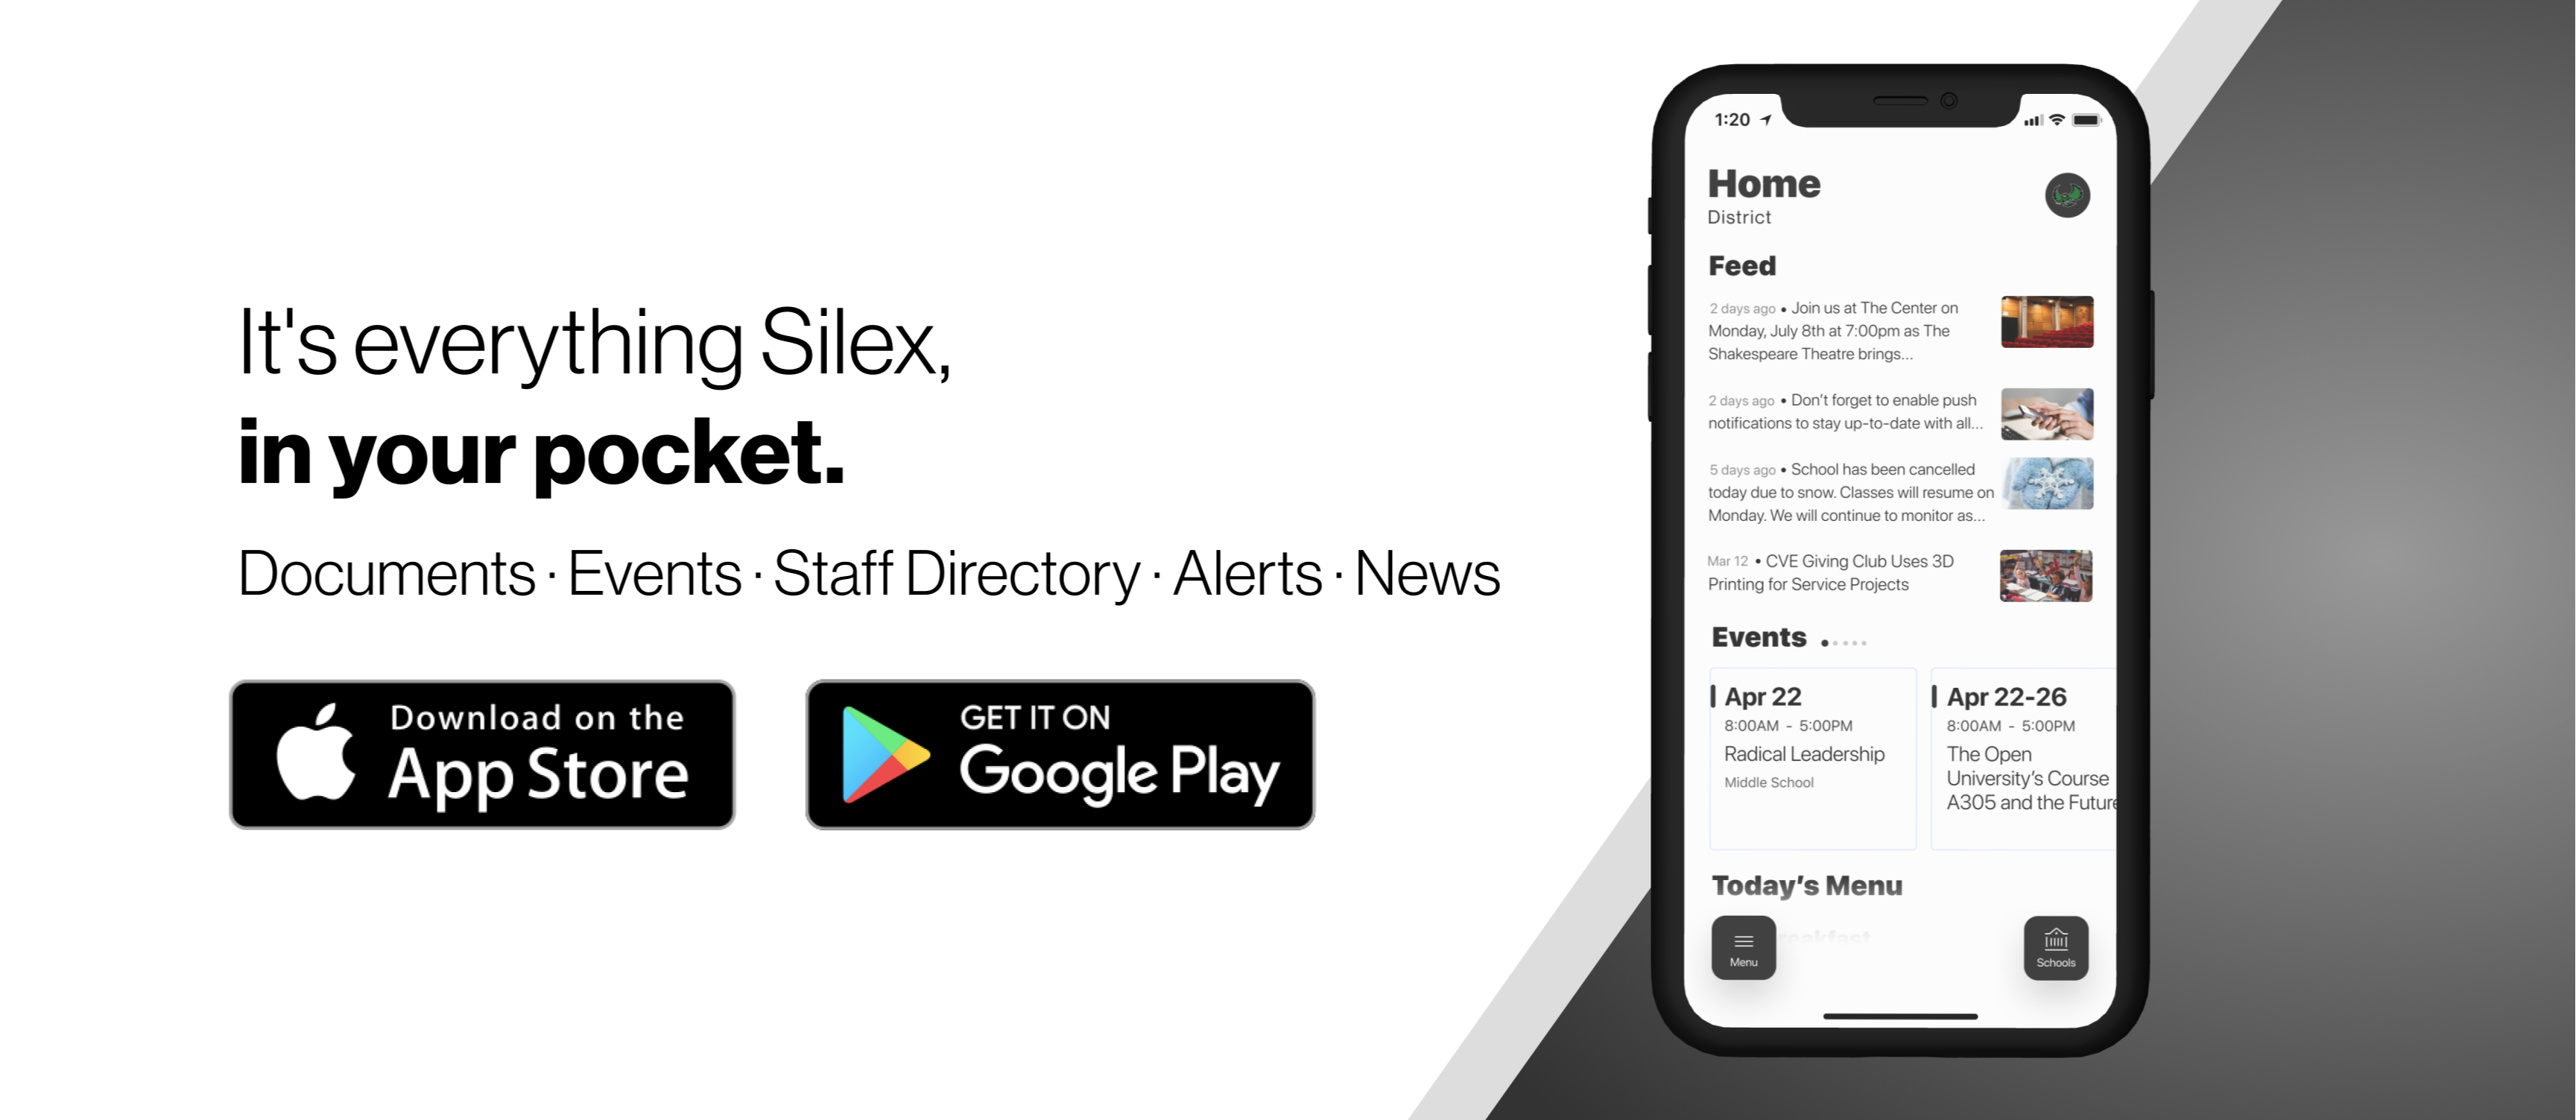 Silex Mobile app  advertisement